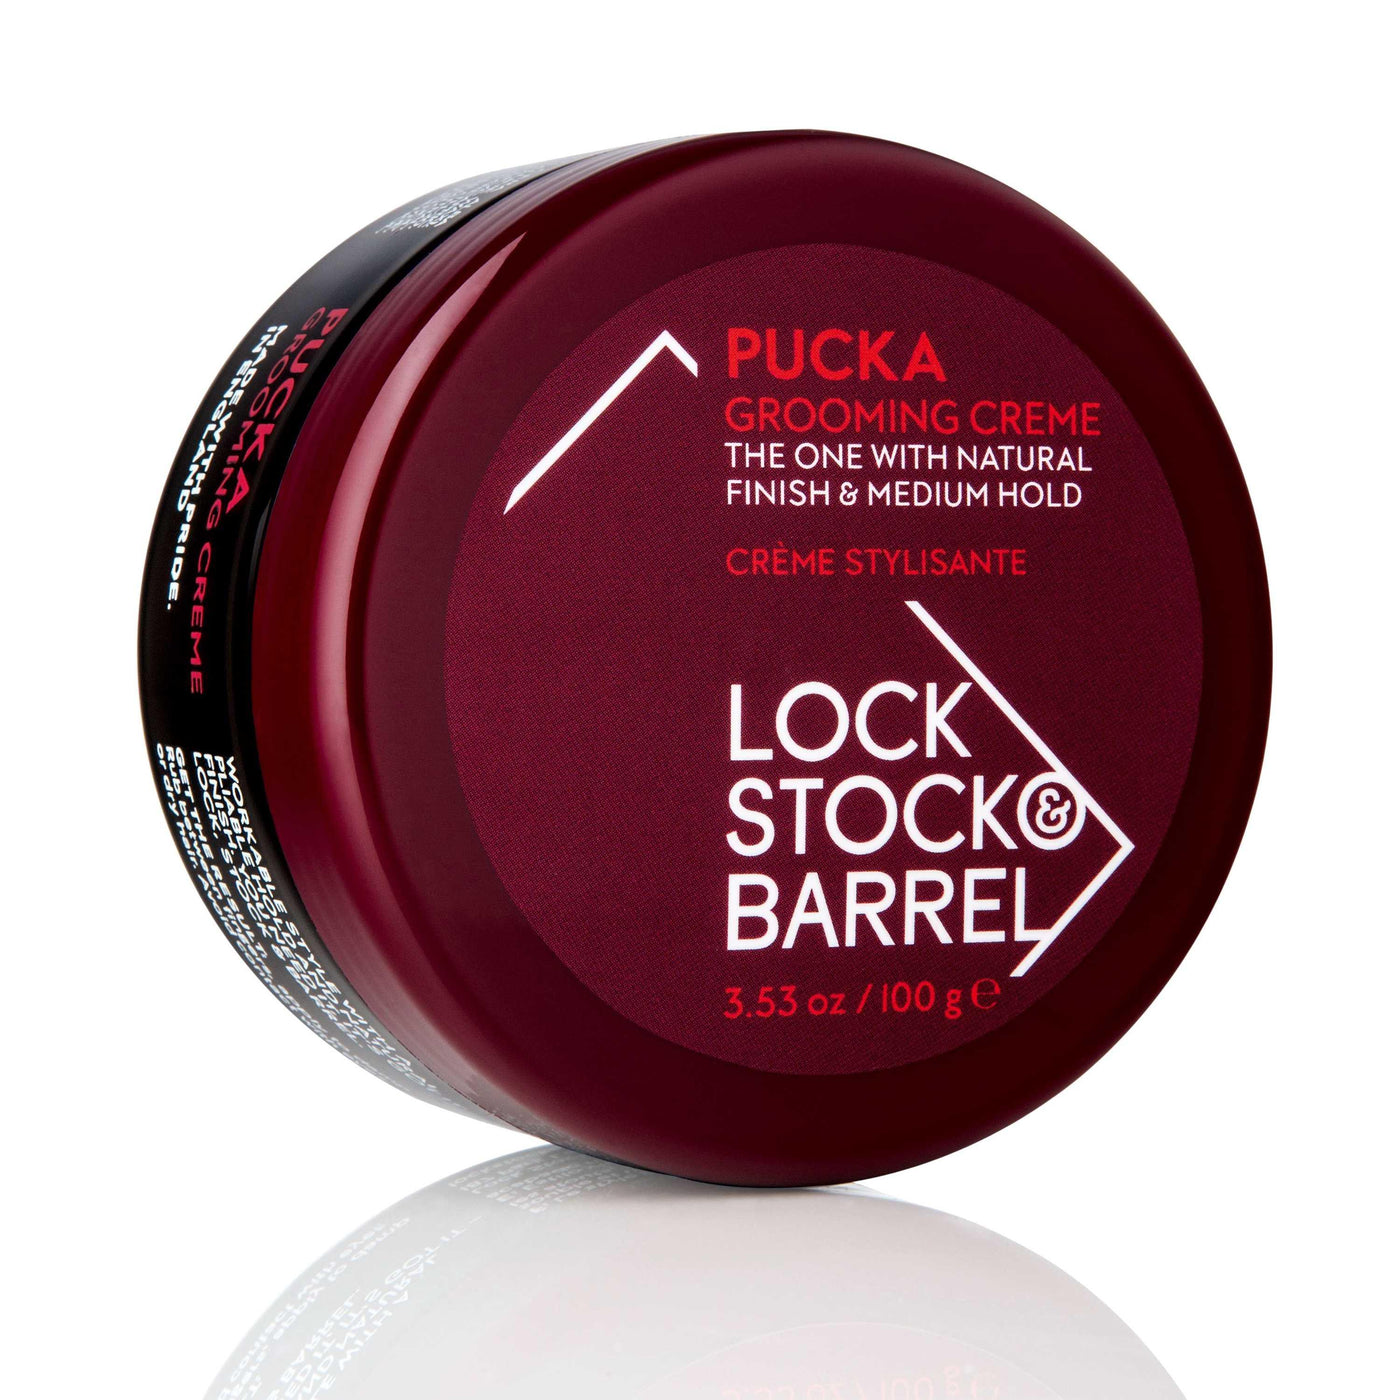 Lock Stock & Barrel - Pucka Grooming Creme - 3.53 Oz / 100 G Lock Stock & Barrel Boutique Deauville